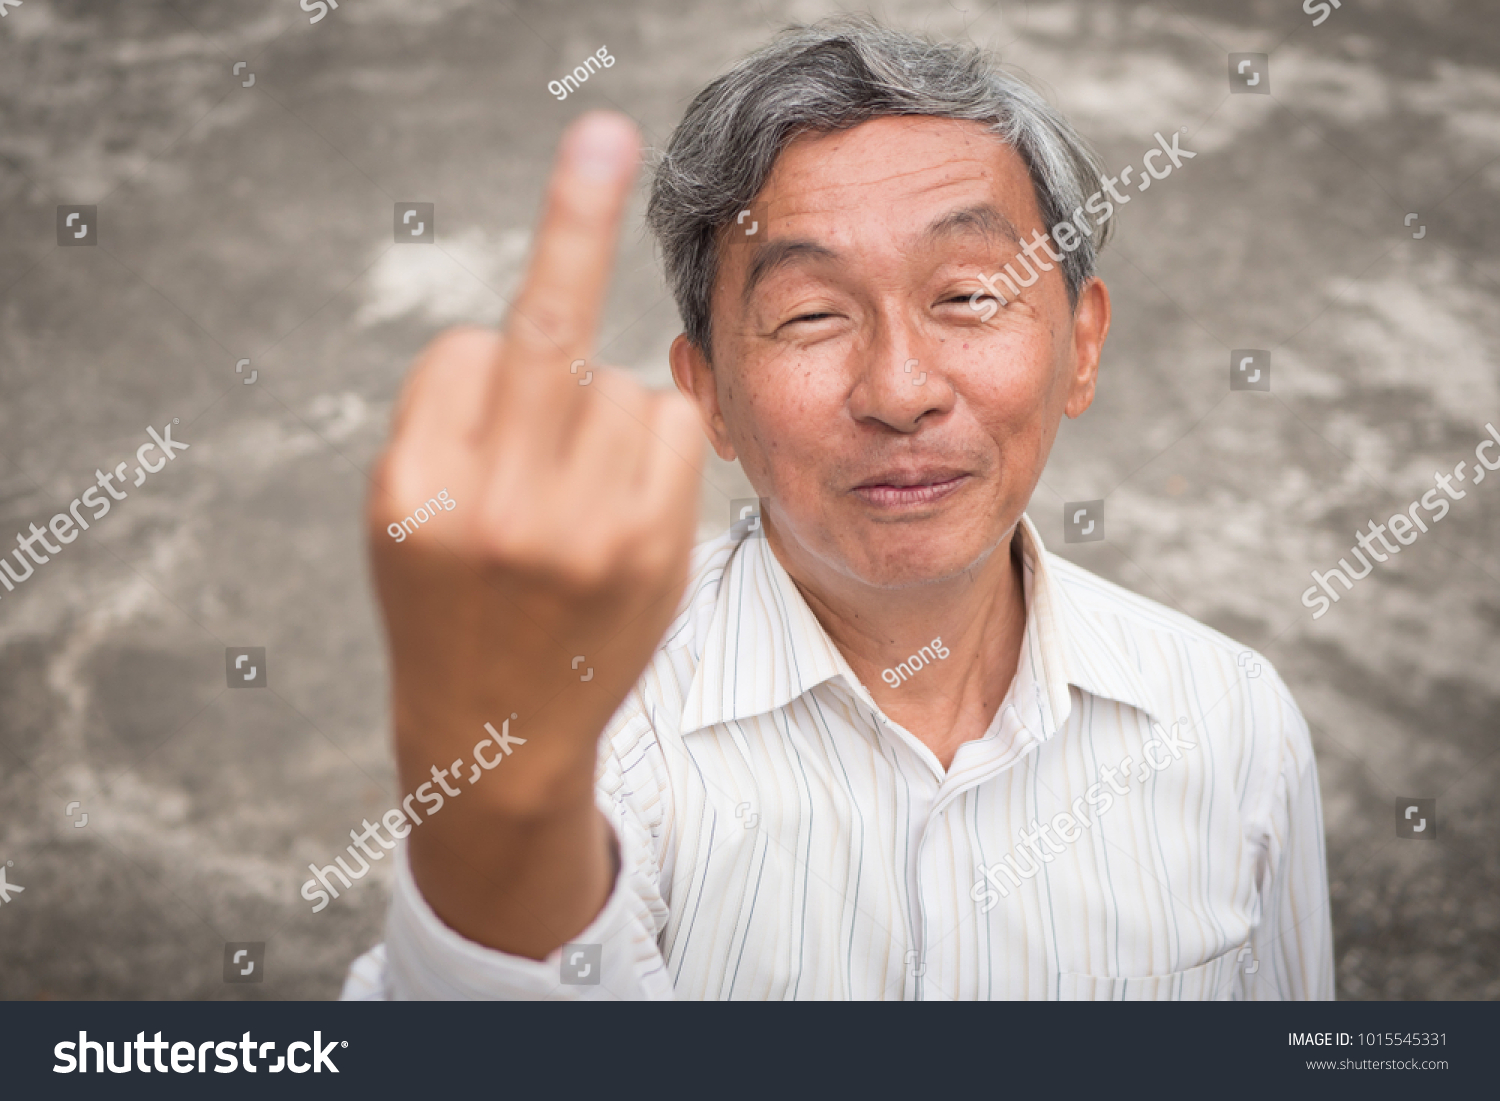 stock-photo-senior-old-man-flipping-middle-finger-rude-hand-sign-gesture-1015545331.jpg